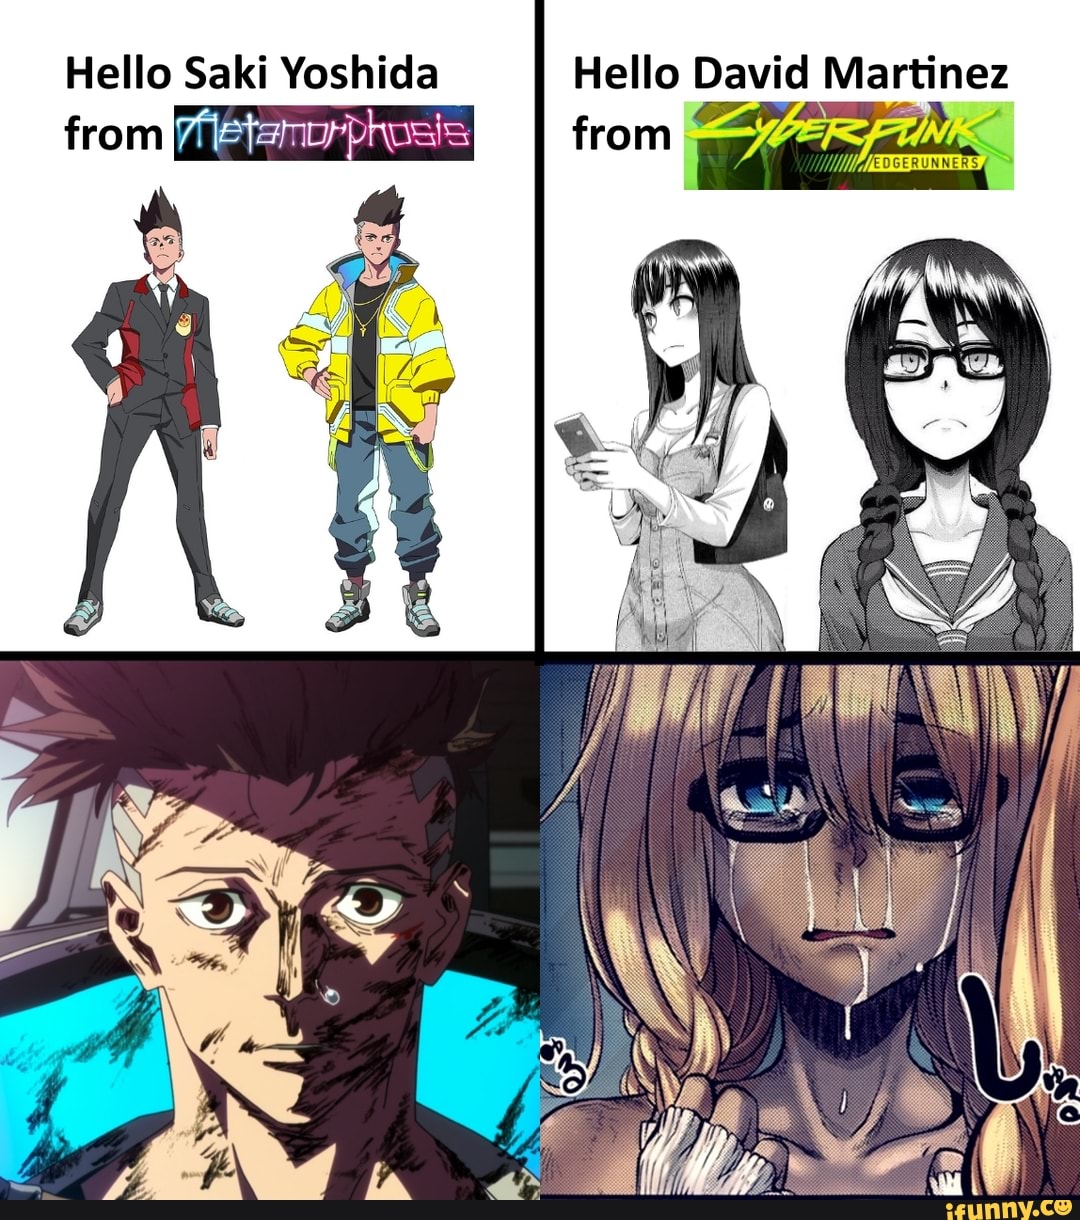 Anime Memes Even Non-Weebs Can Appreciate - Memebase - Funny Memes